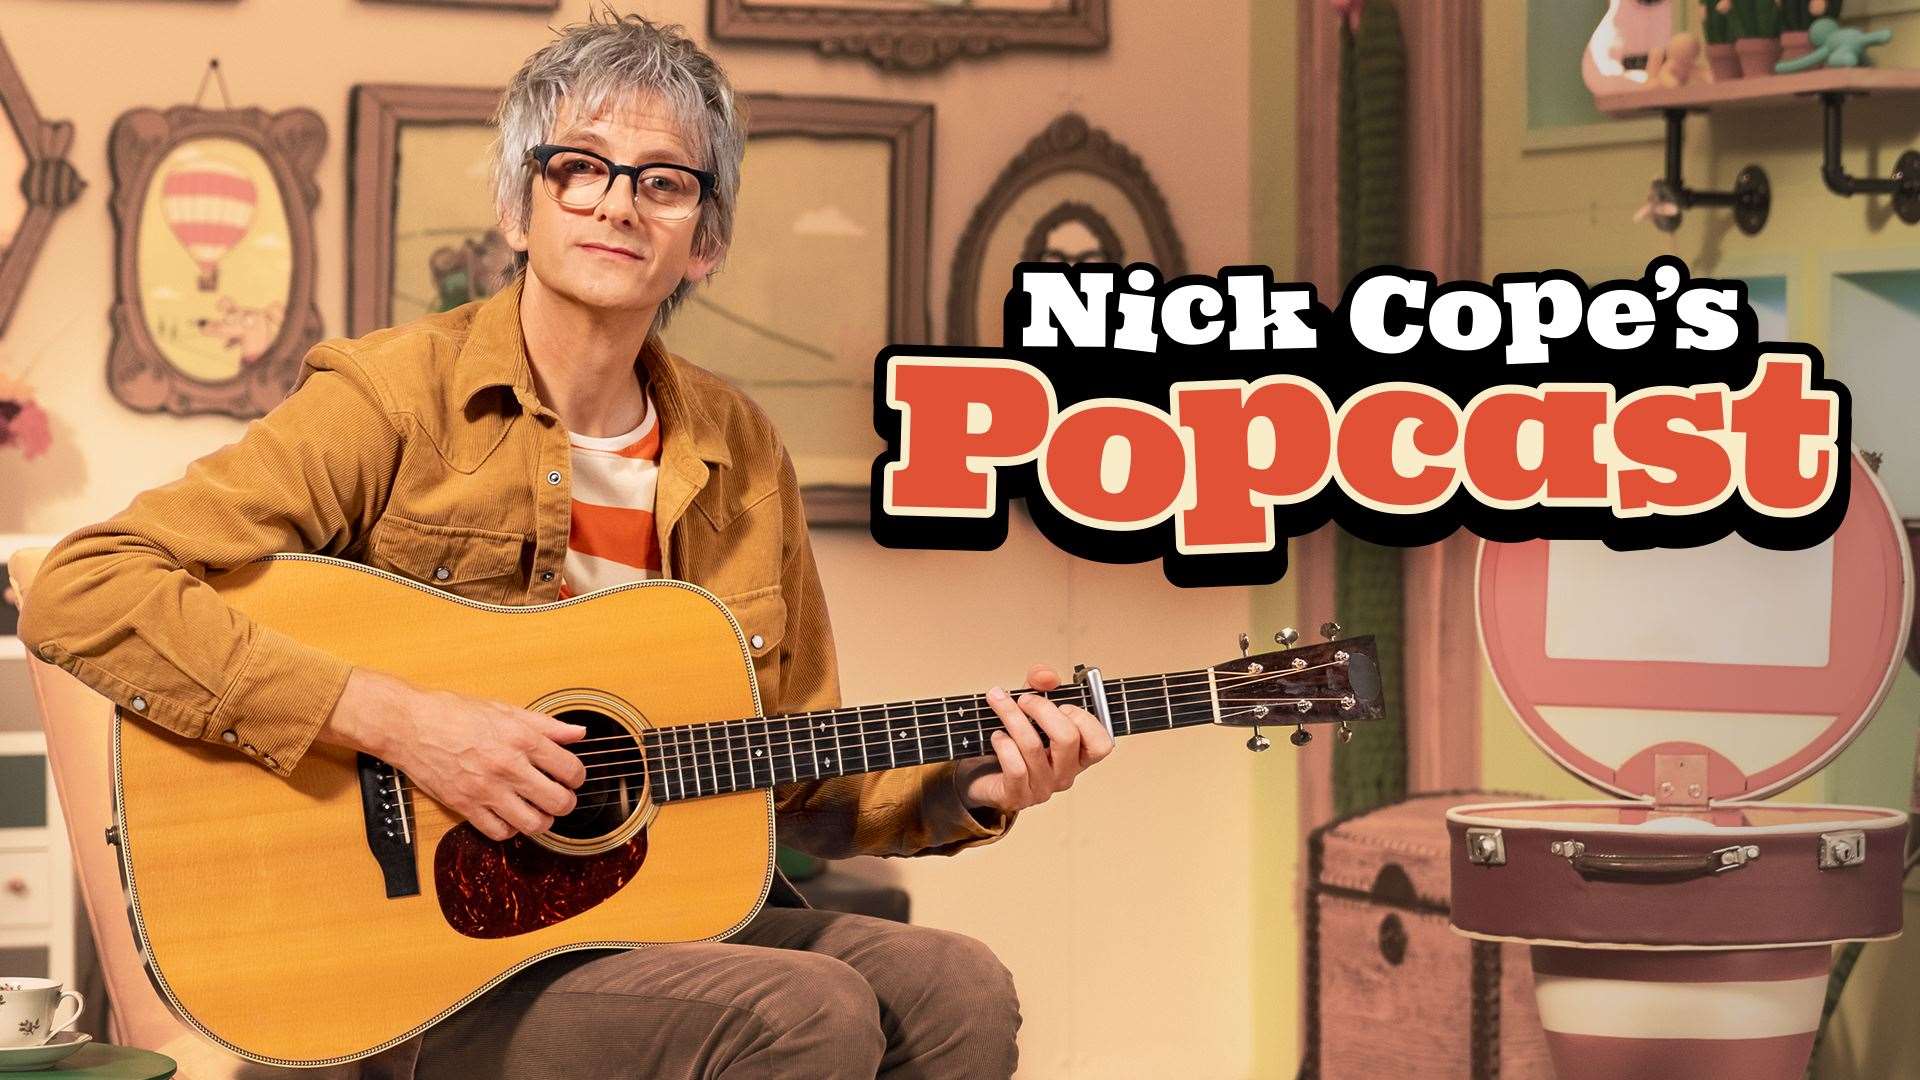 Nick Cope's Popcast begins on Saturday, April 25